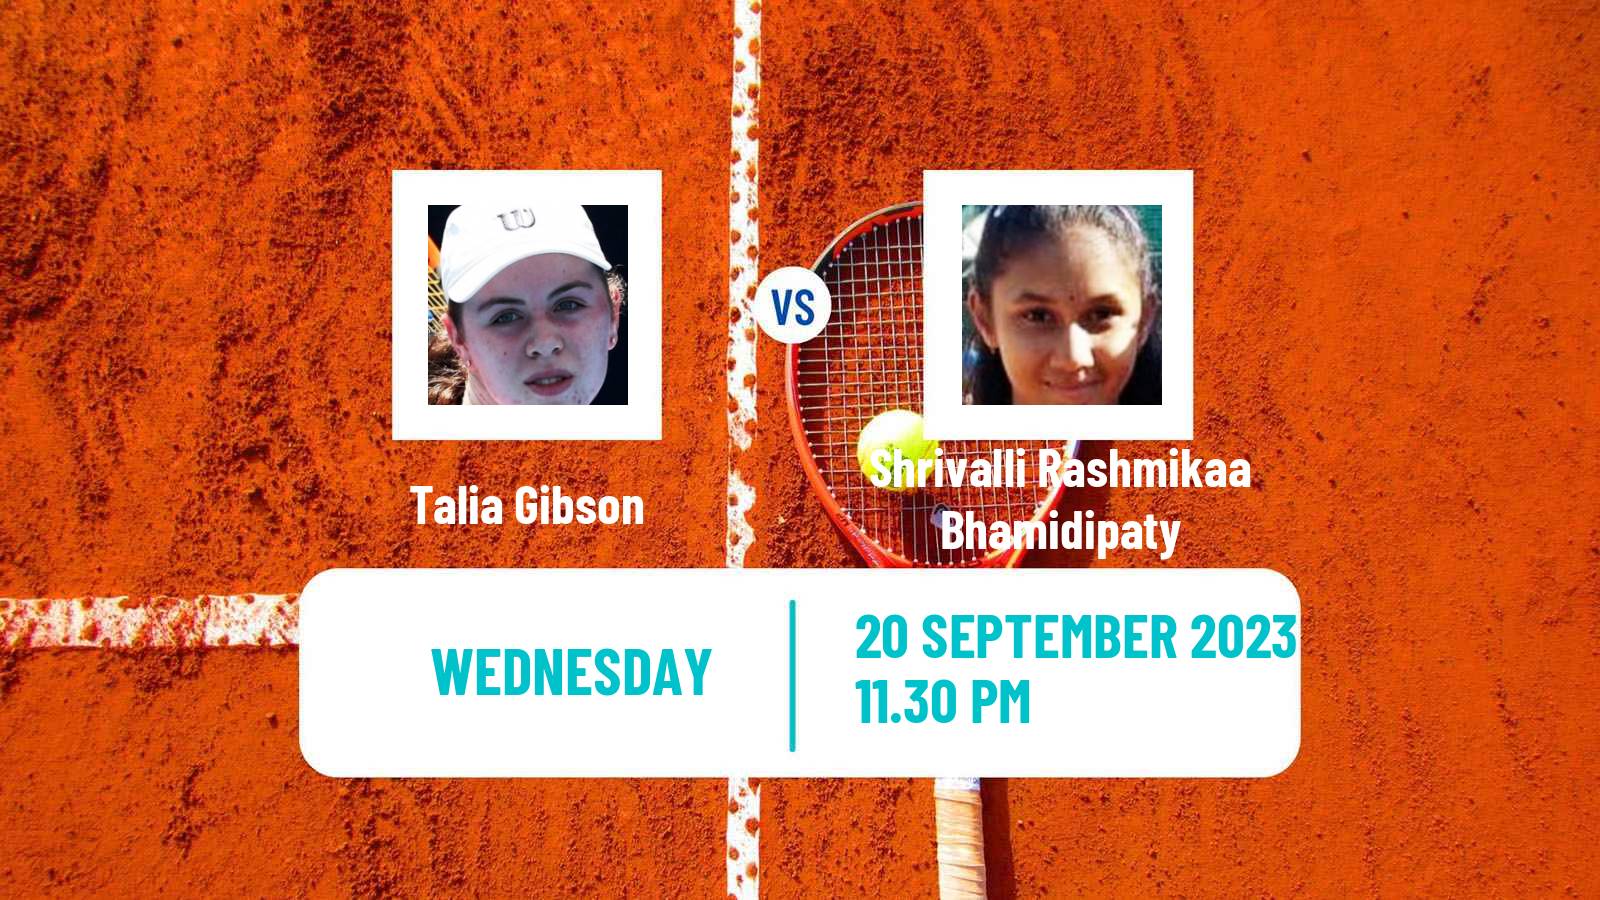 Tennis ITF W25 Perth 2 Women Talia Gibson - Shrivalli Rashmikaa Bhamidipaty